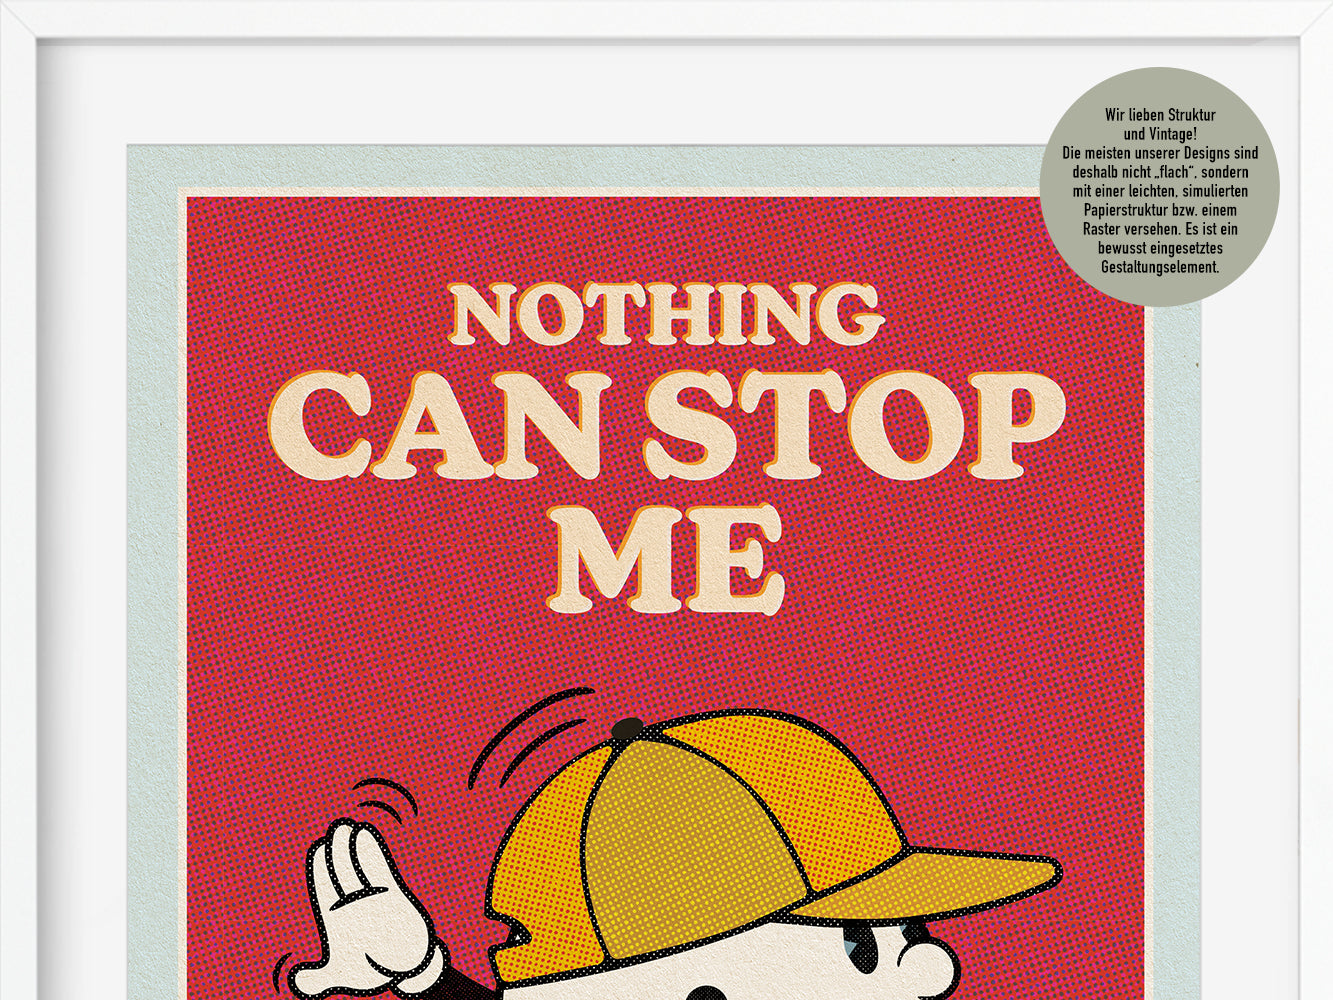 DRUCK ›Nothing Can Stop Me‹ / Wanddeko, Art Print, Skateboard, Comic, Cartoon, Illustation, Retro Poster, Wandbild, Kinderzimmer